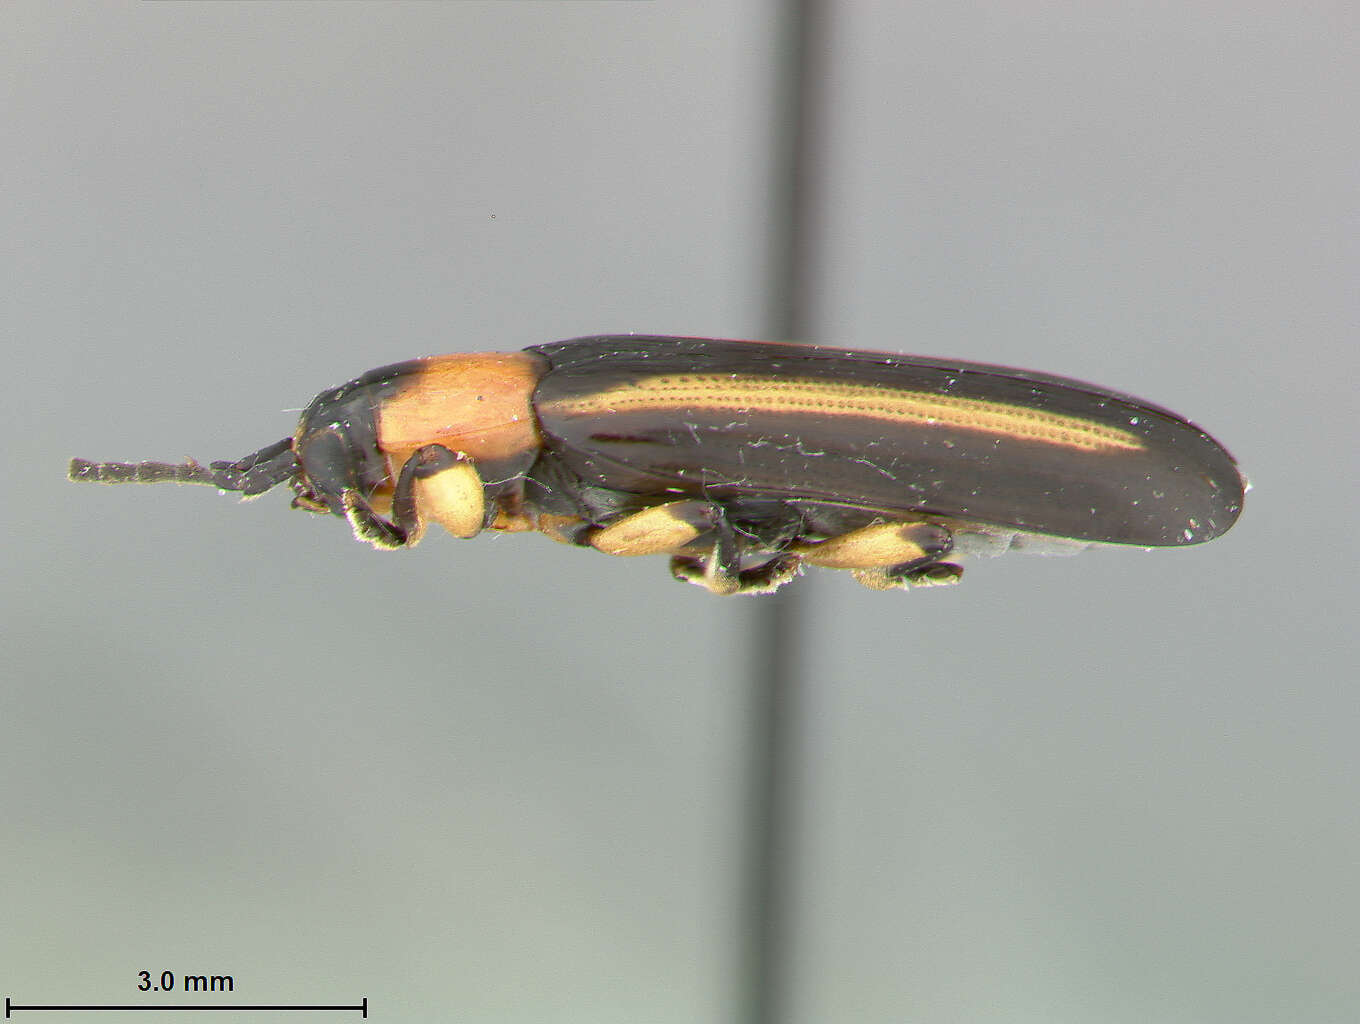 Image of leaf beetles